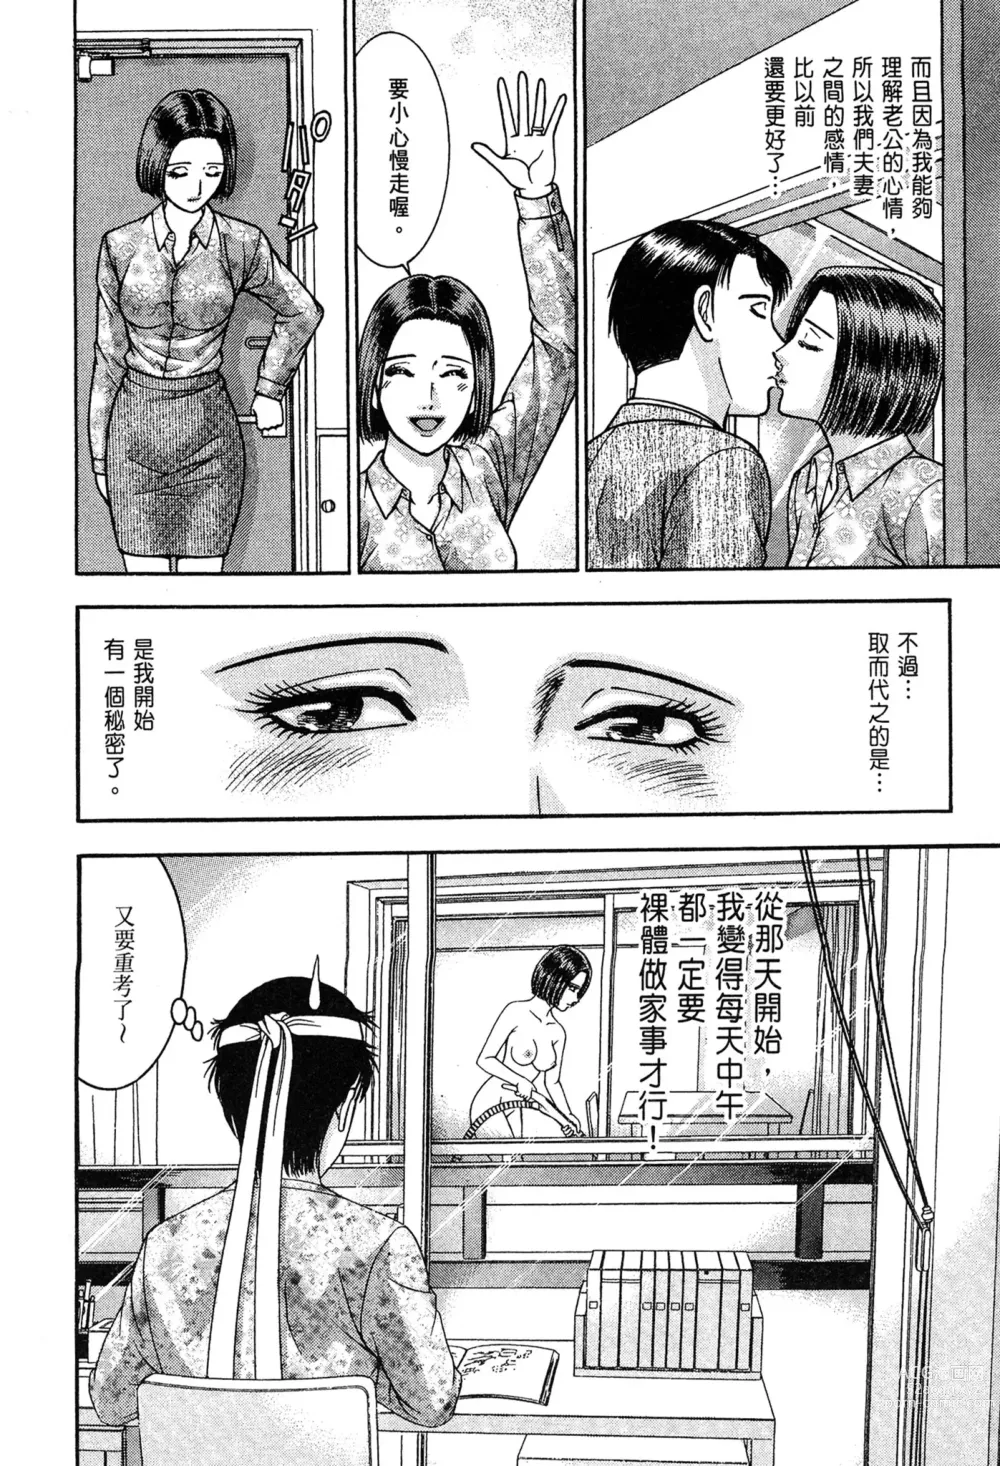 Page 28 of manga 現代美人妻圖鑑